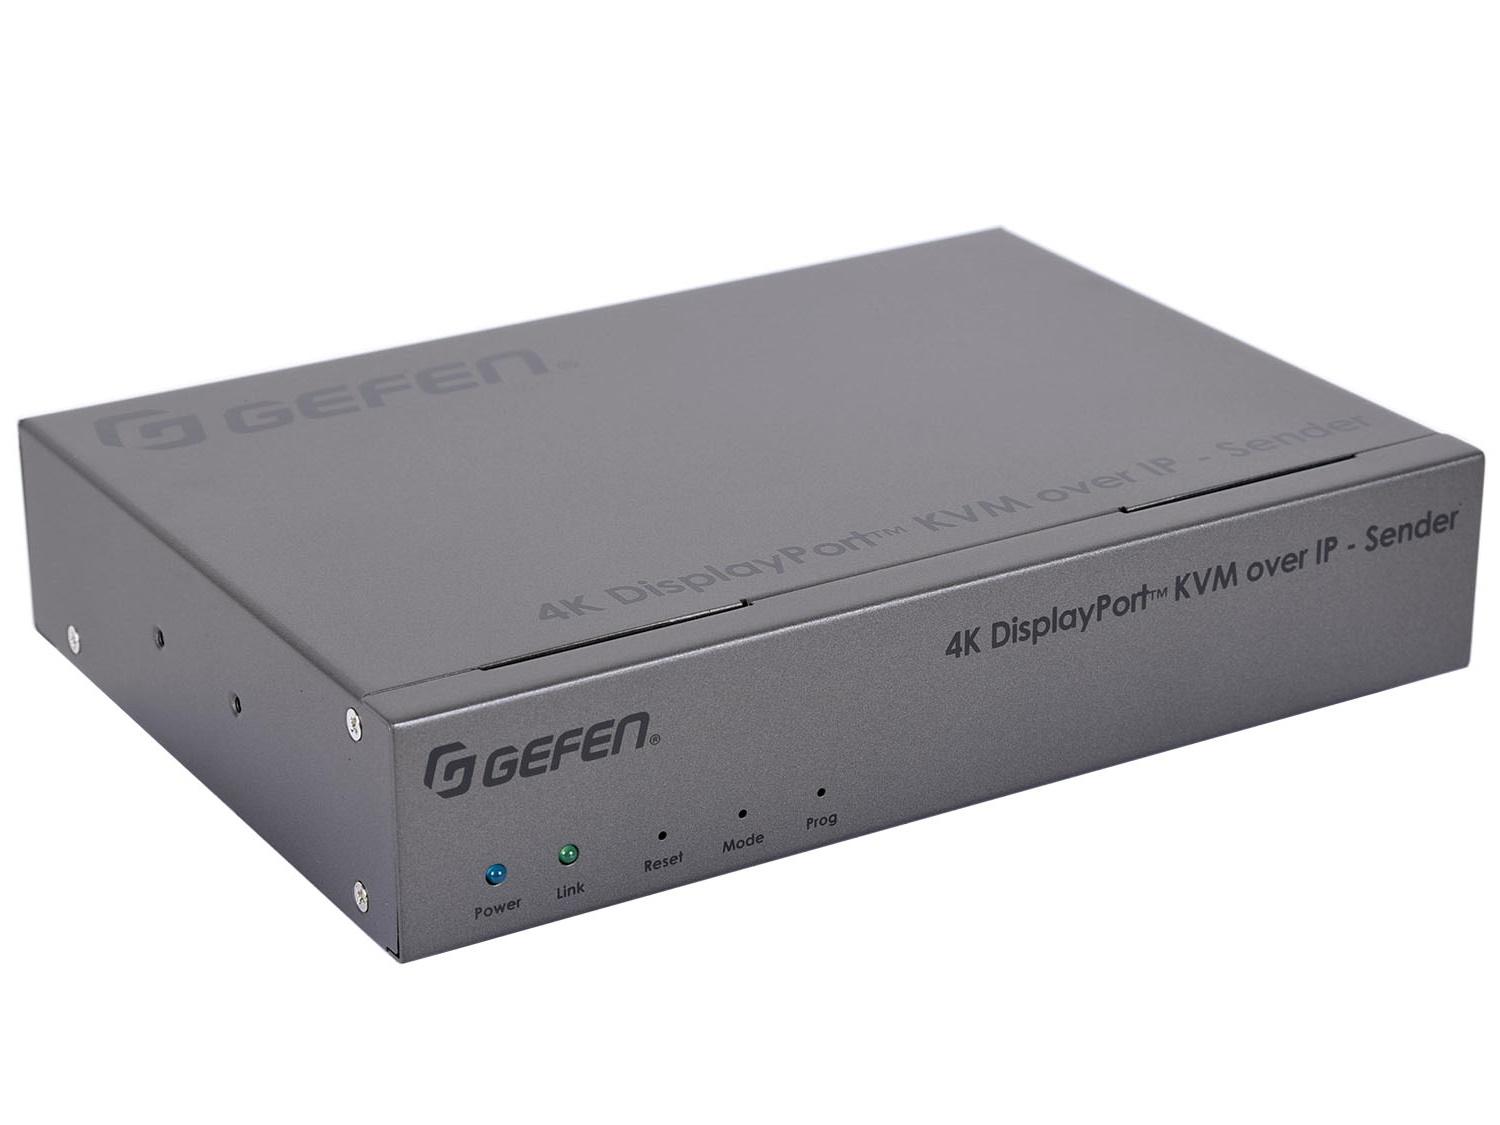 EXT-DPKA-LANS-TX 4K DisplayPort KVM over IP Extender (Transmitter) with USB/Audio/RS-232/IR by Gefen